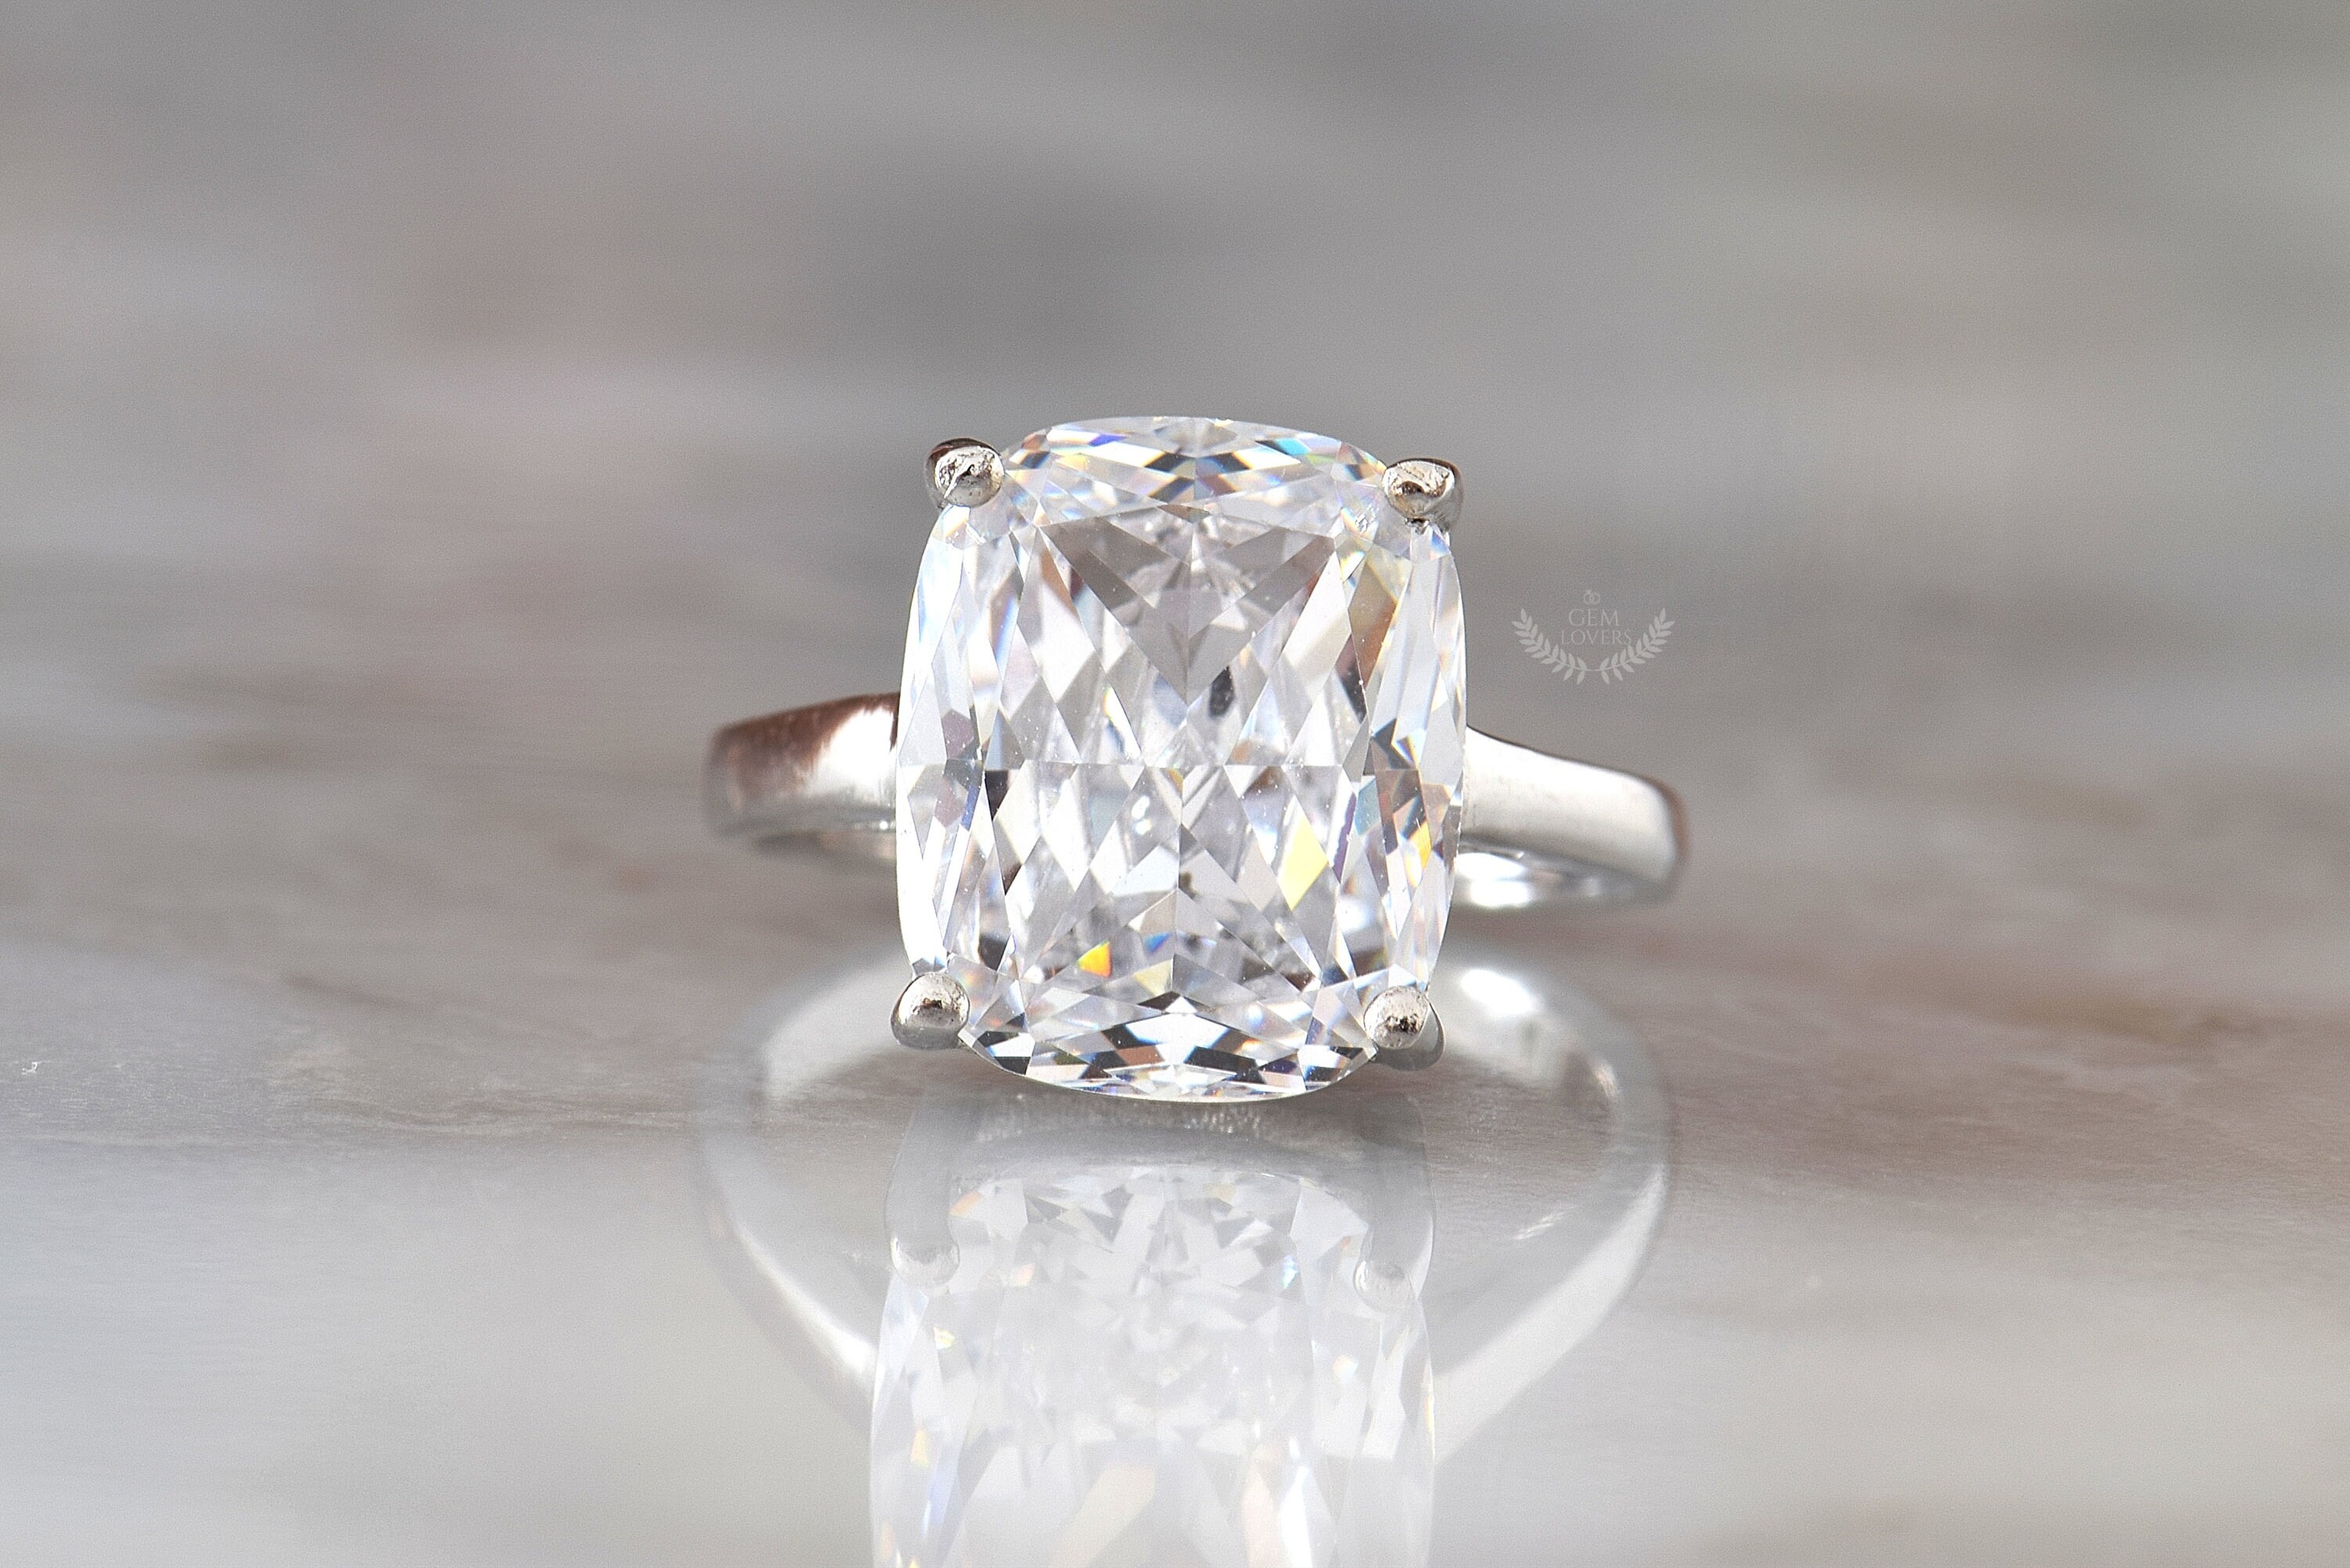 Cushion Cut Diamond Engagement Rings for Women 6 Carats | Etsy